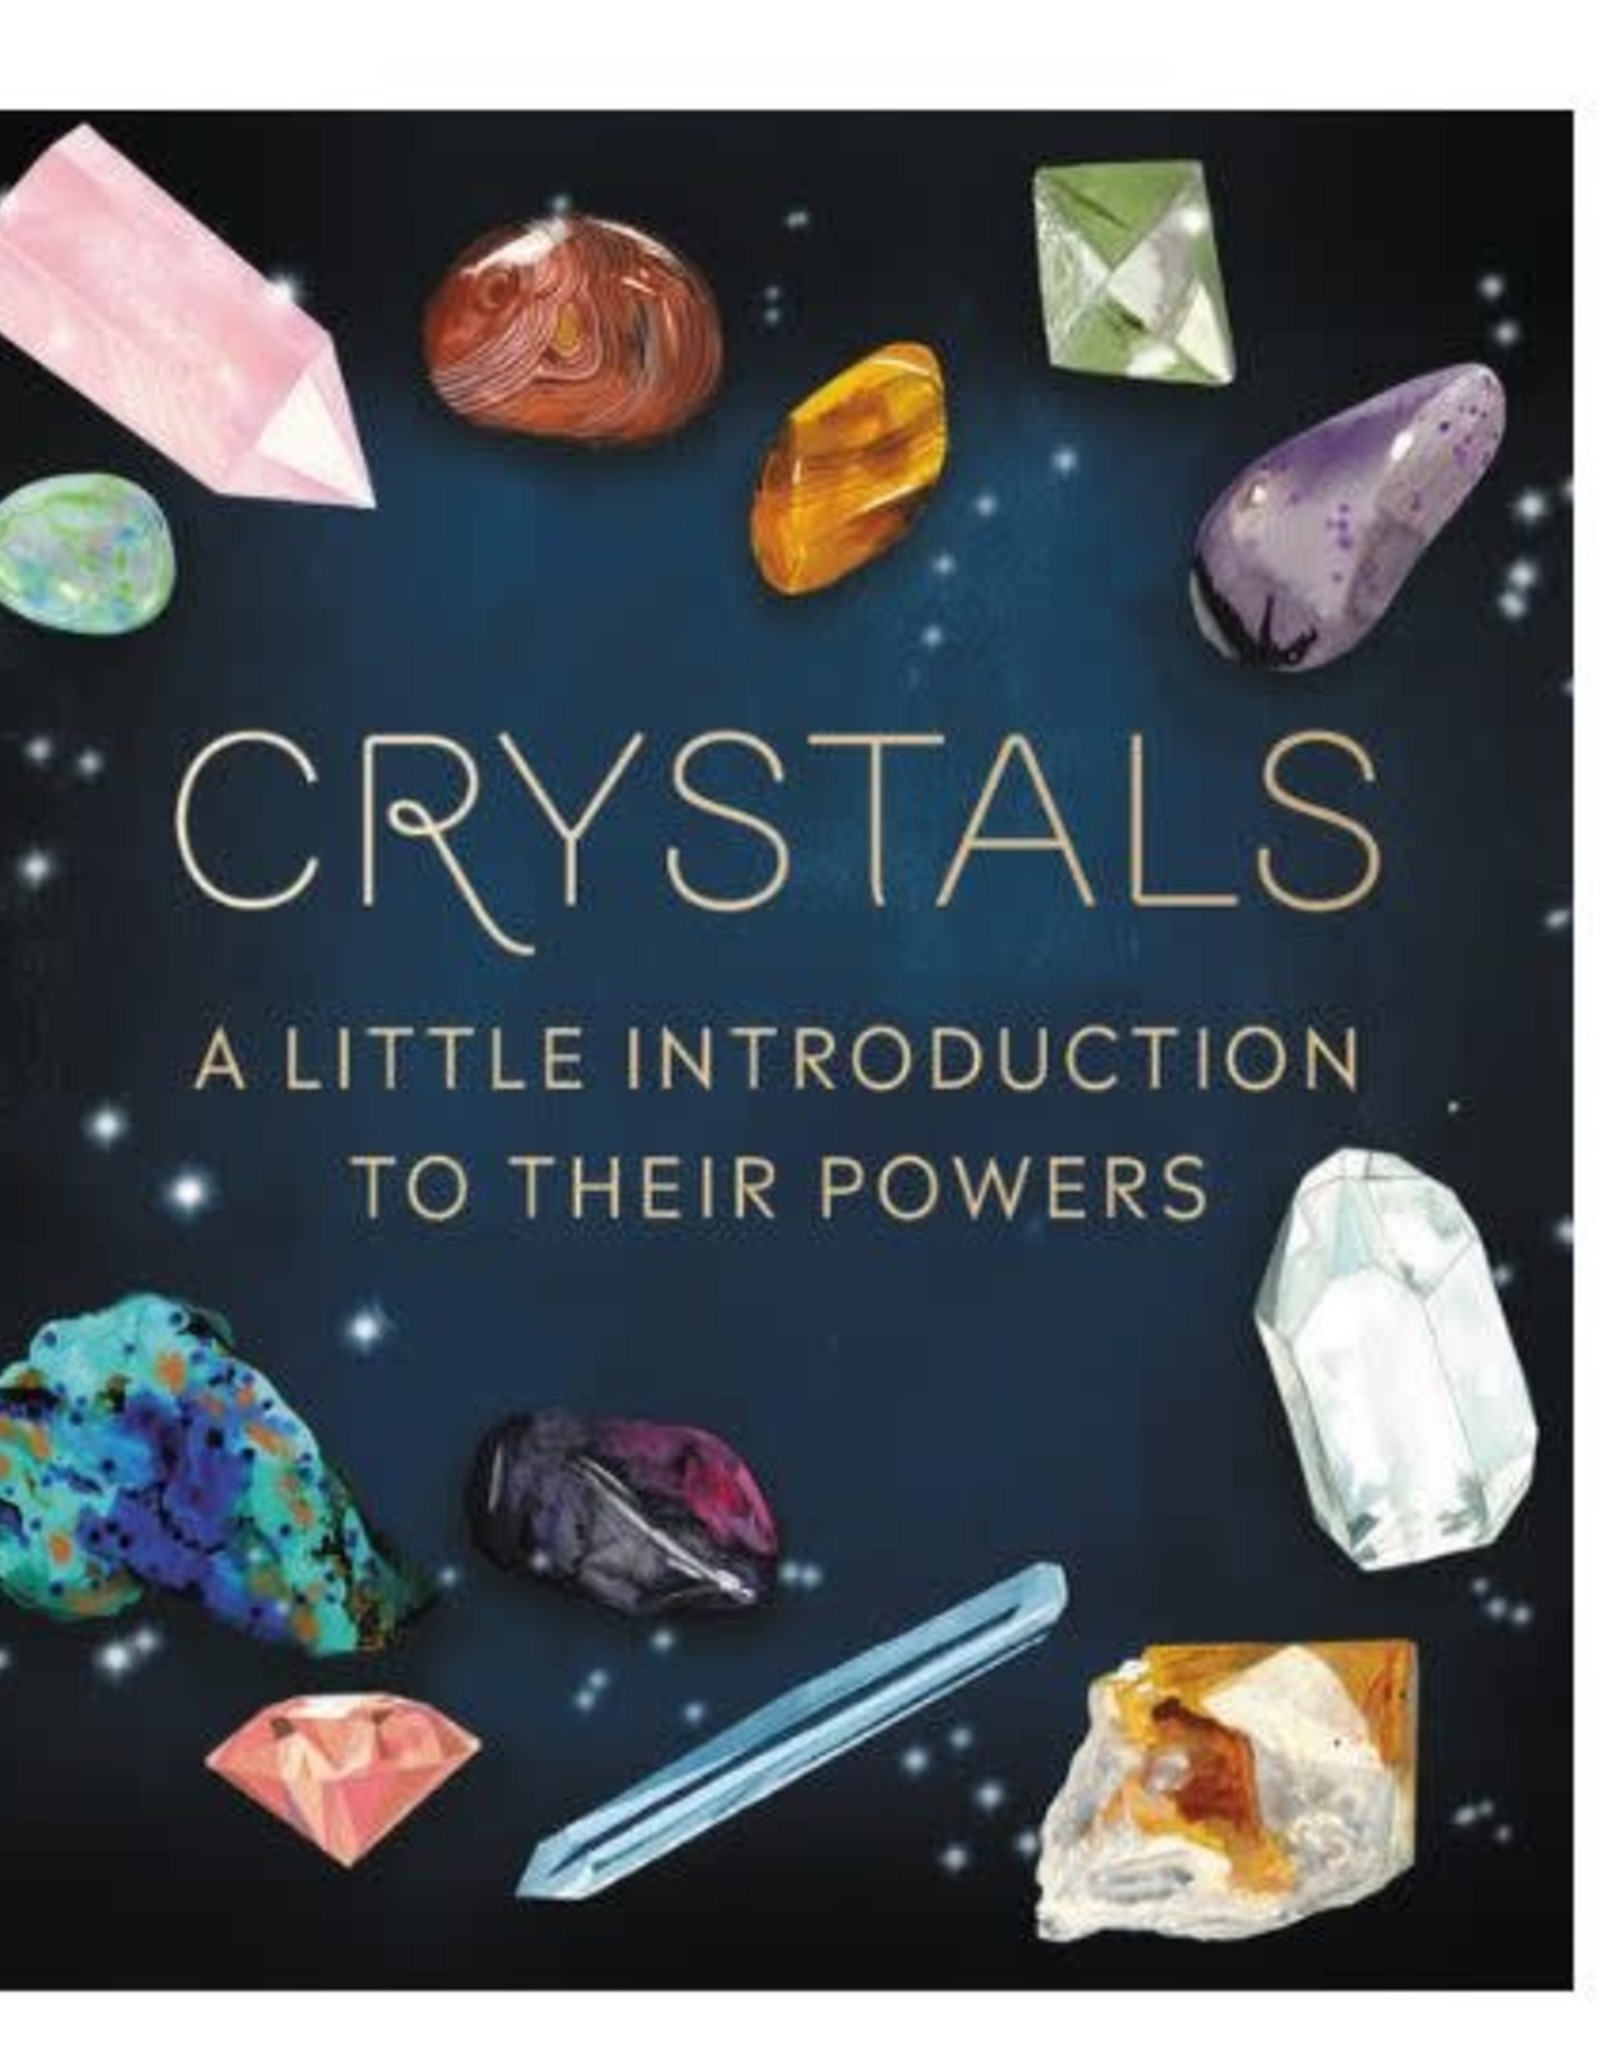 Crystals Pocket Size Book by Nikki Van De Car 2.75" x 3.25"